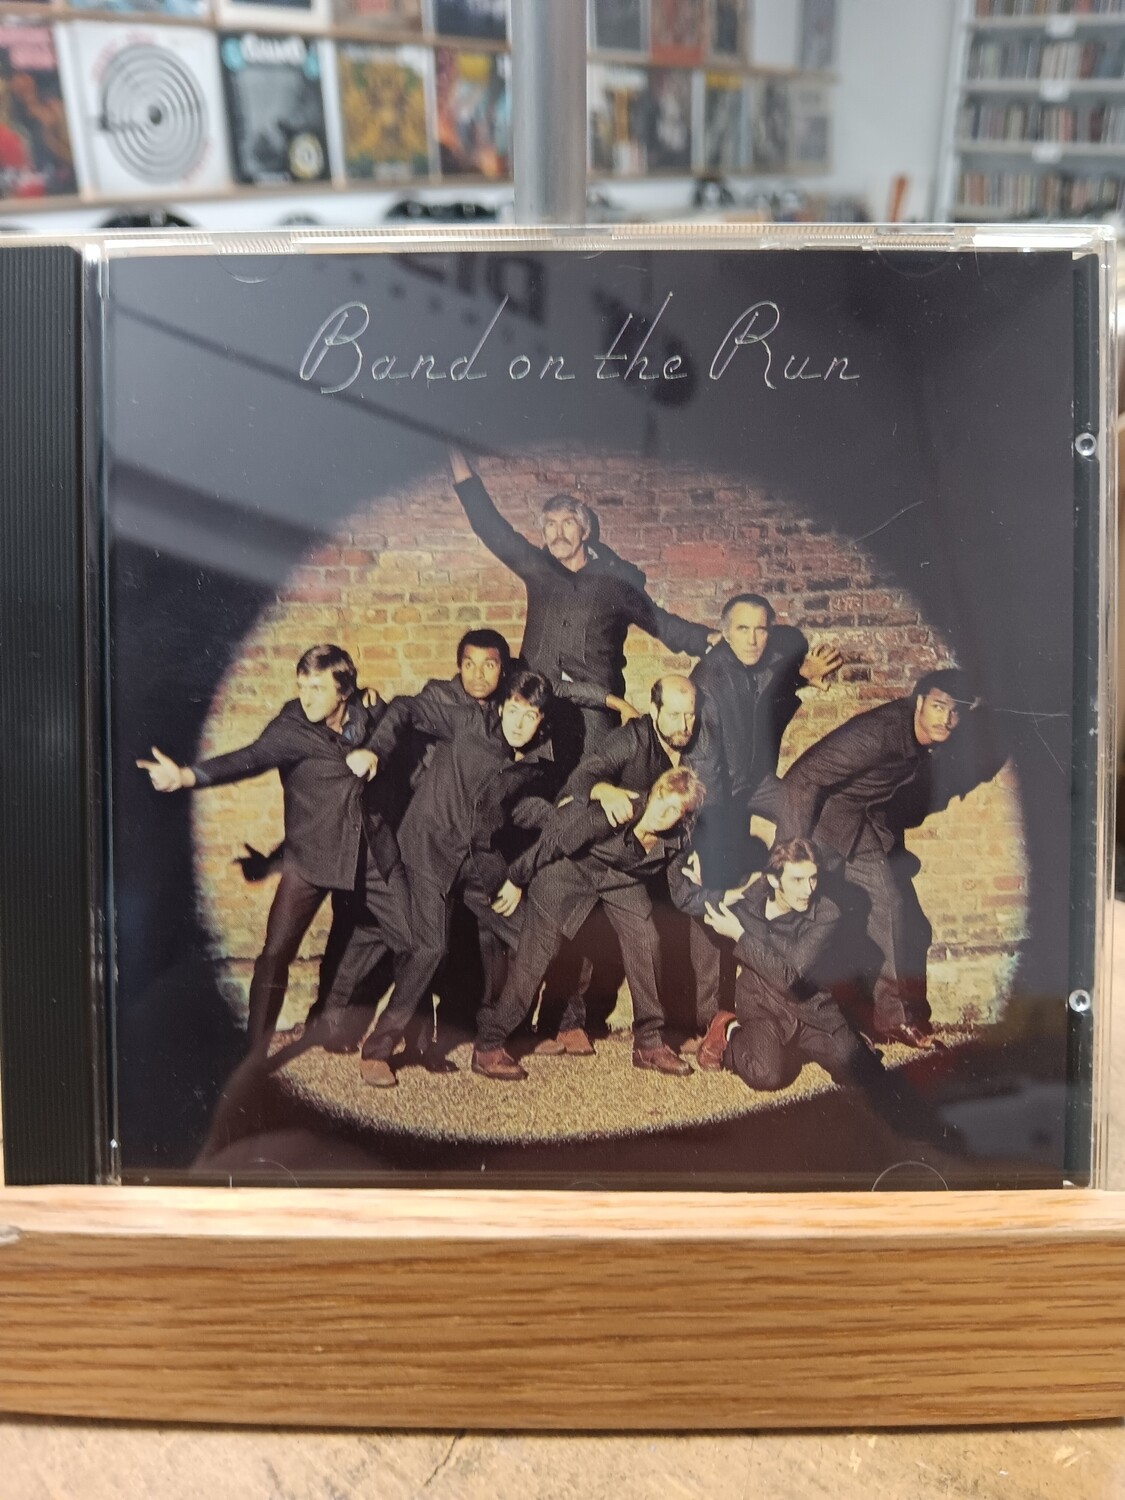 PAUL MCCARTNEY & THE WINGS - Band on the run (CD)